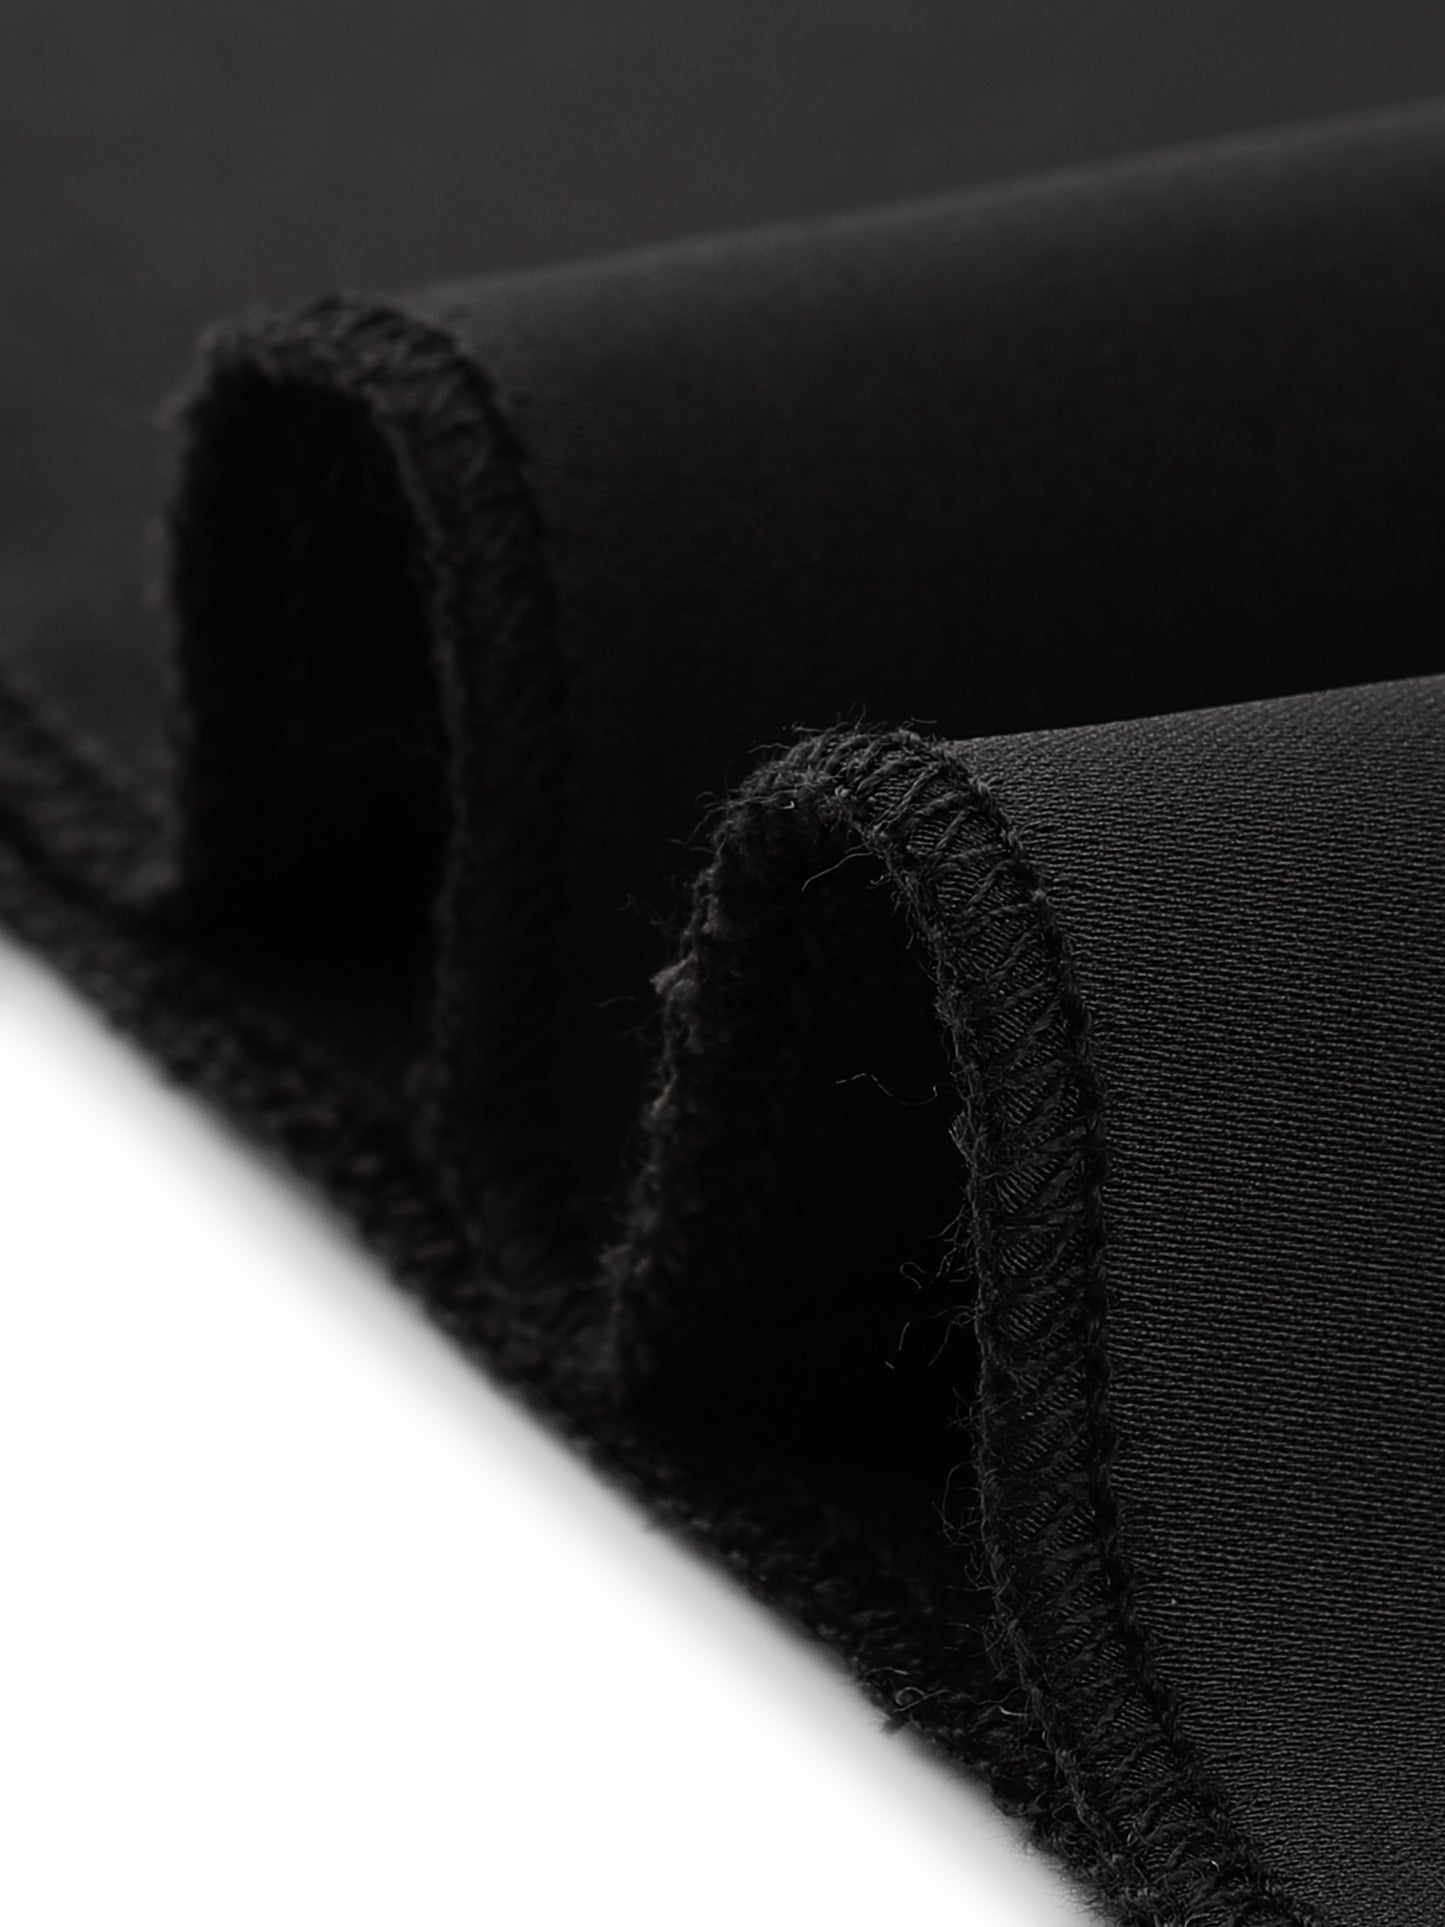 cheibear Satin Lingerie Lace Trim Cami Tops Shorts Sleepwear Pajamas Sets Black